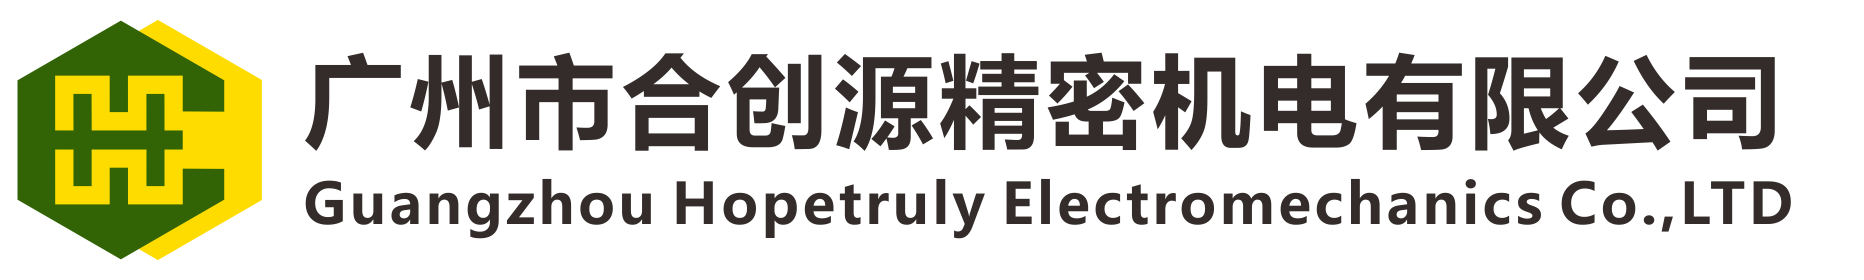 Guangzhou Hopetruly Electromechanics Co.,LTD